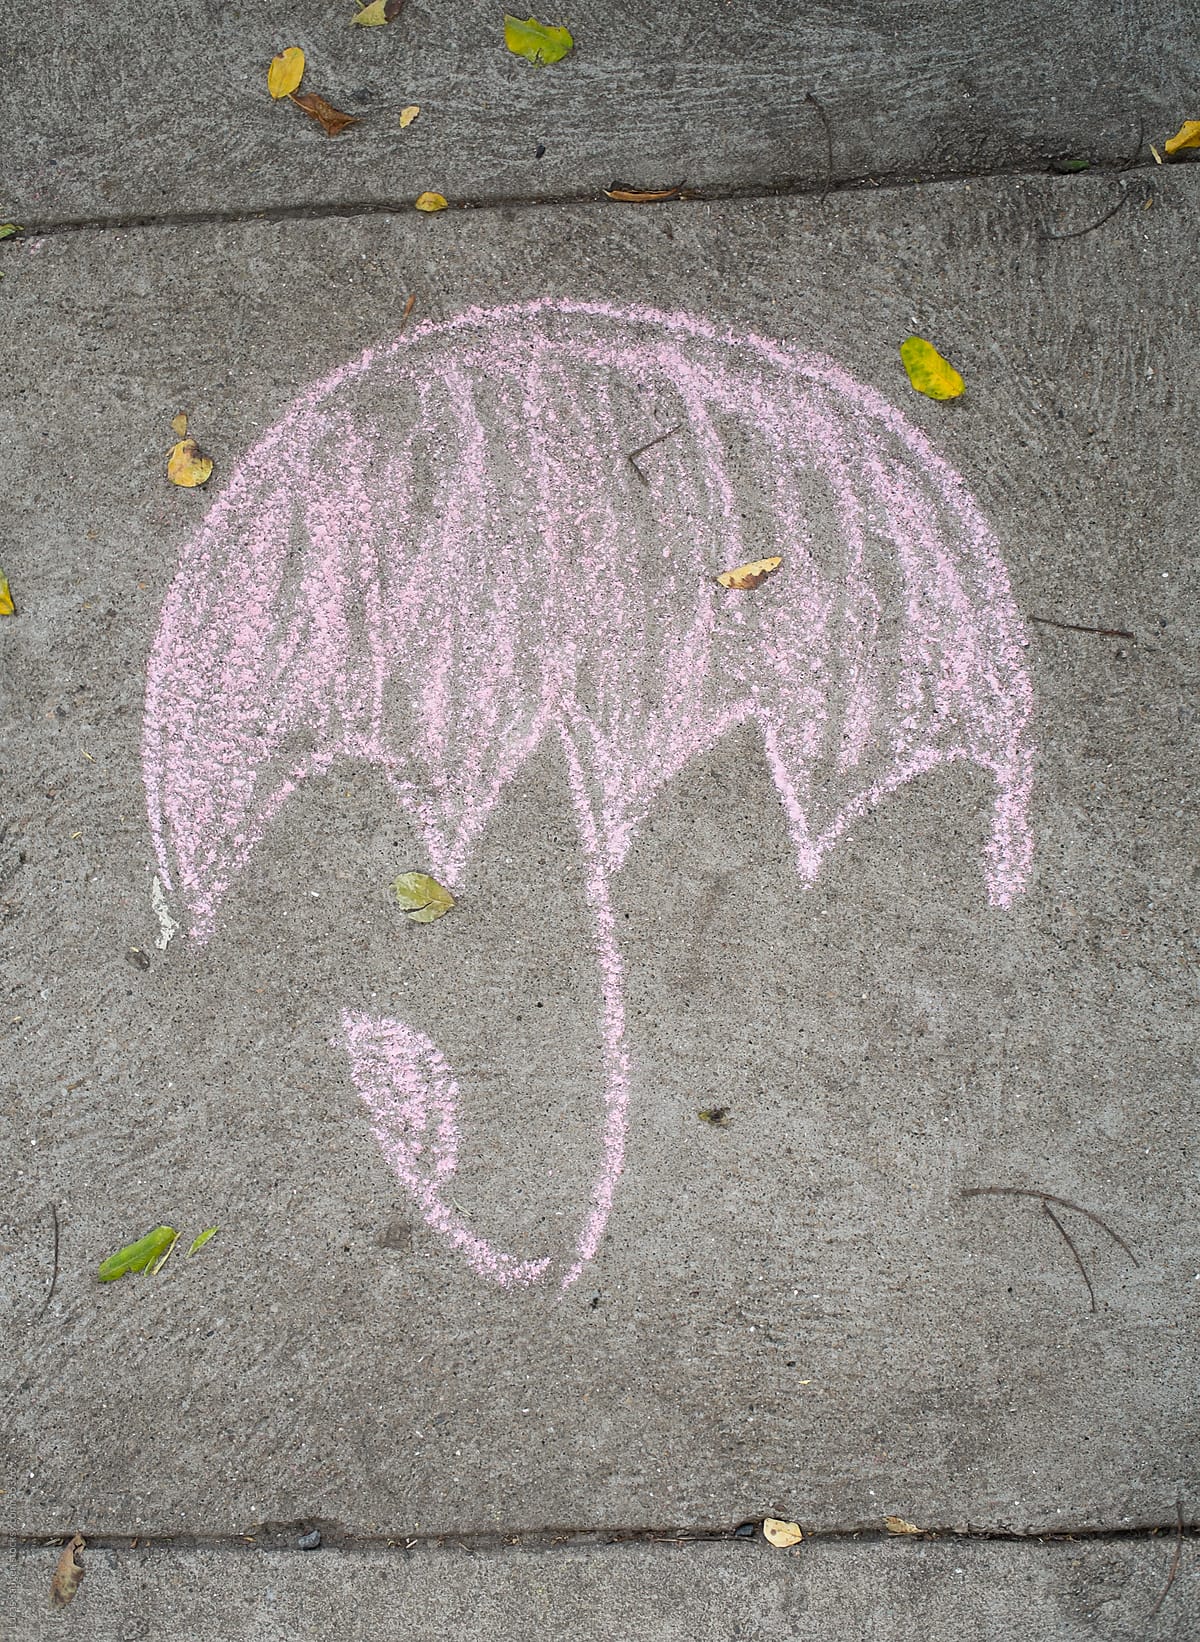 Drawing of a pink umbrella on a city sidewalk.